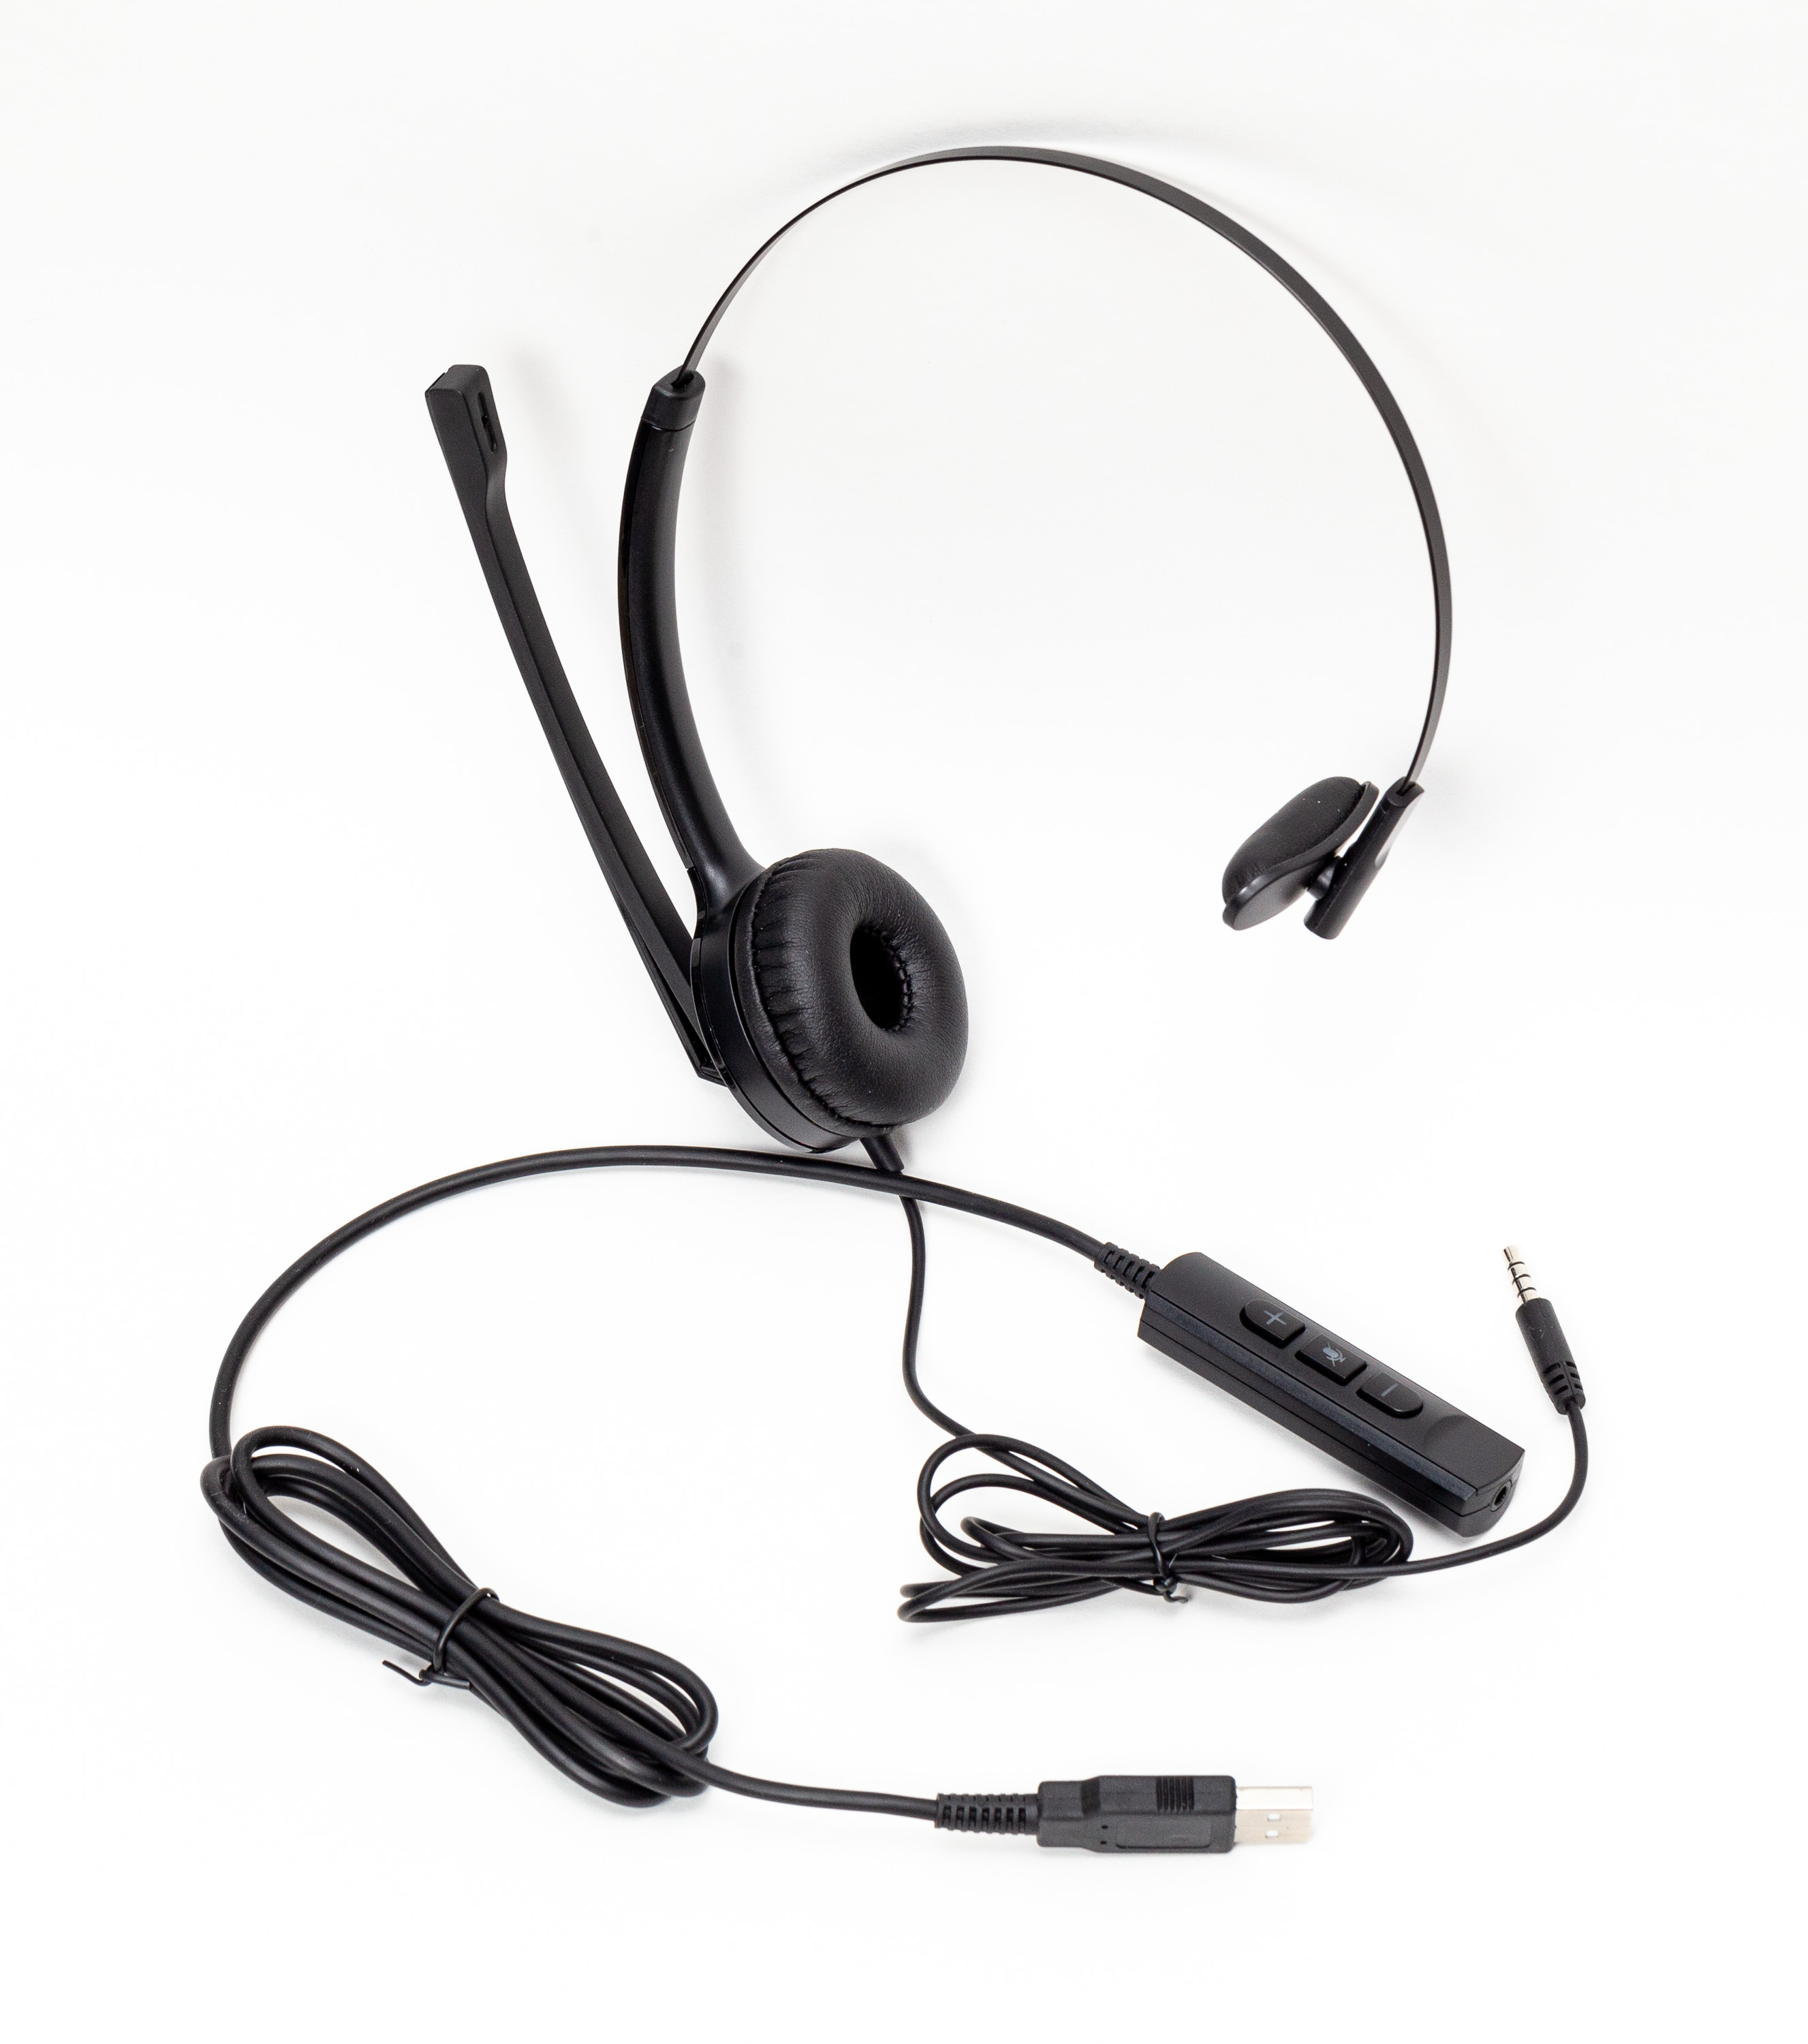 Mpow 323 headset